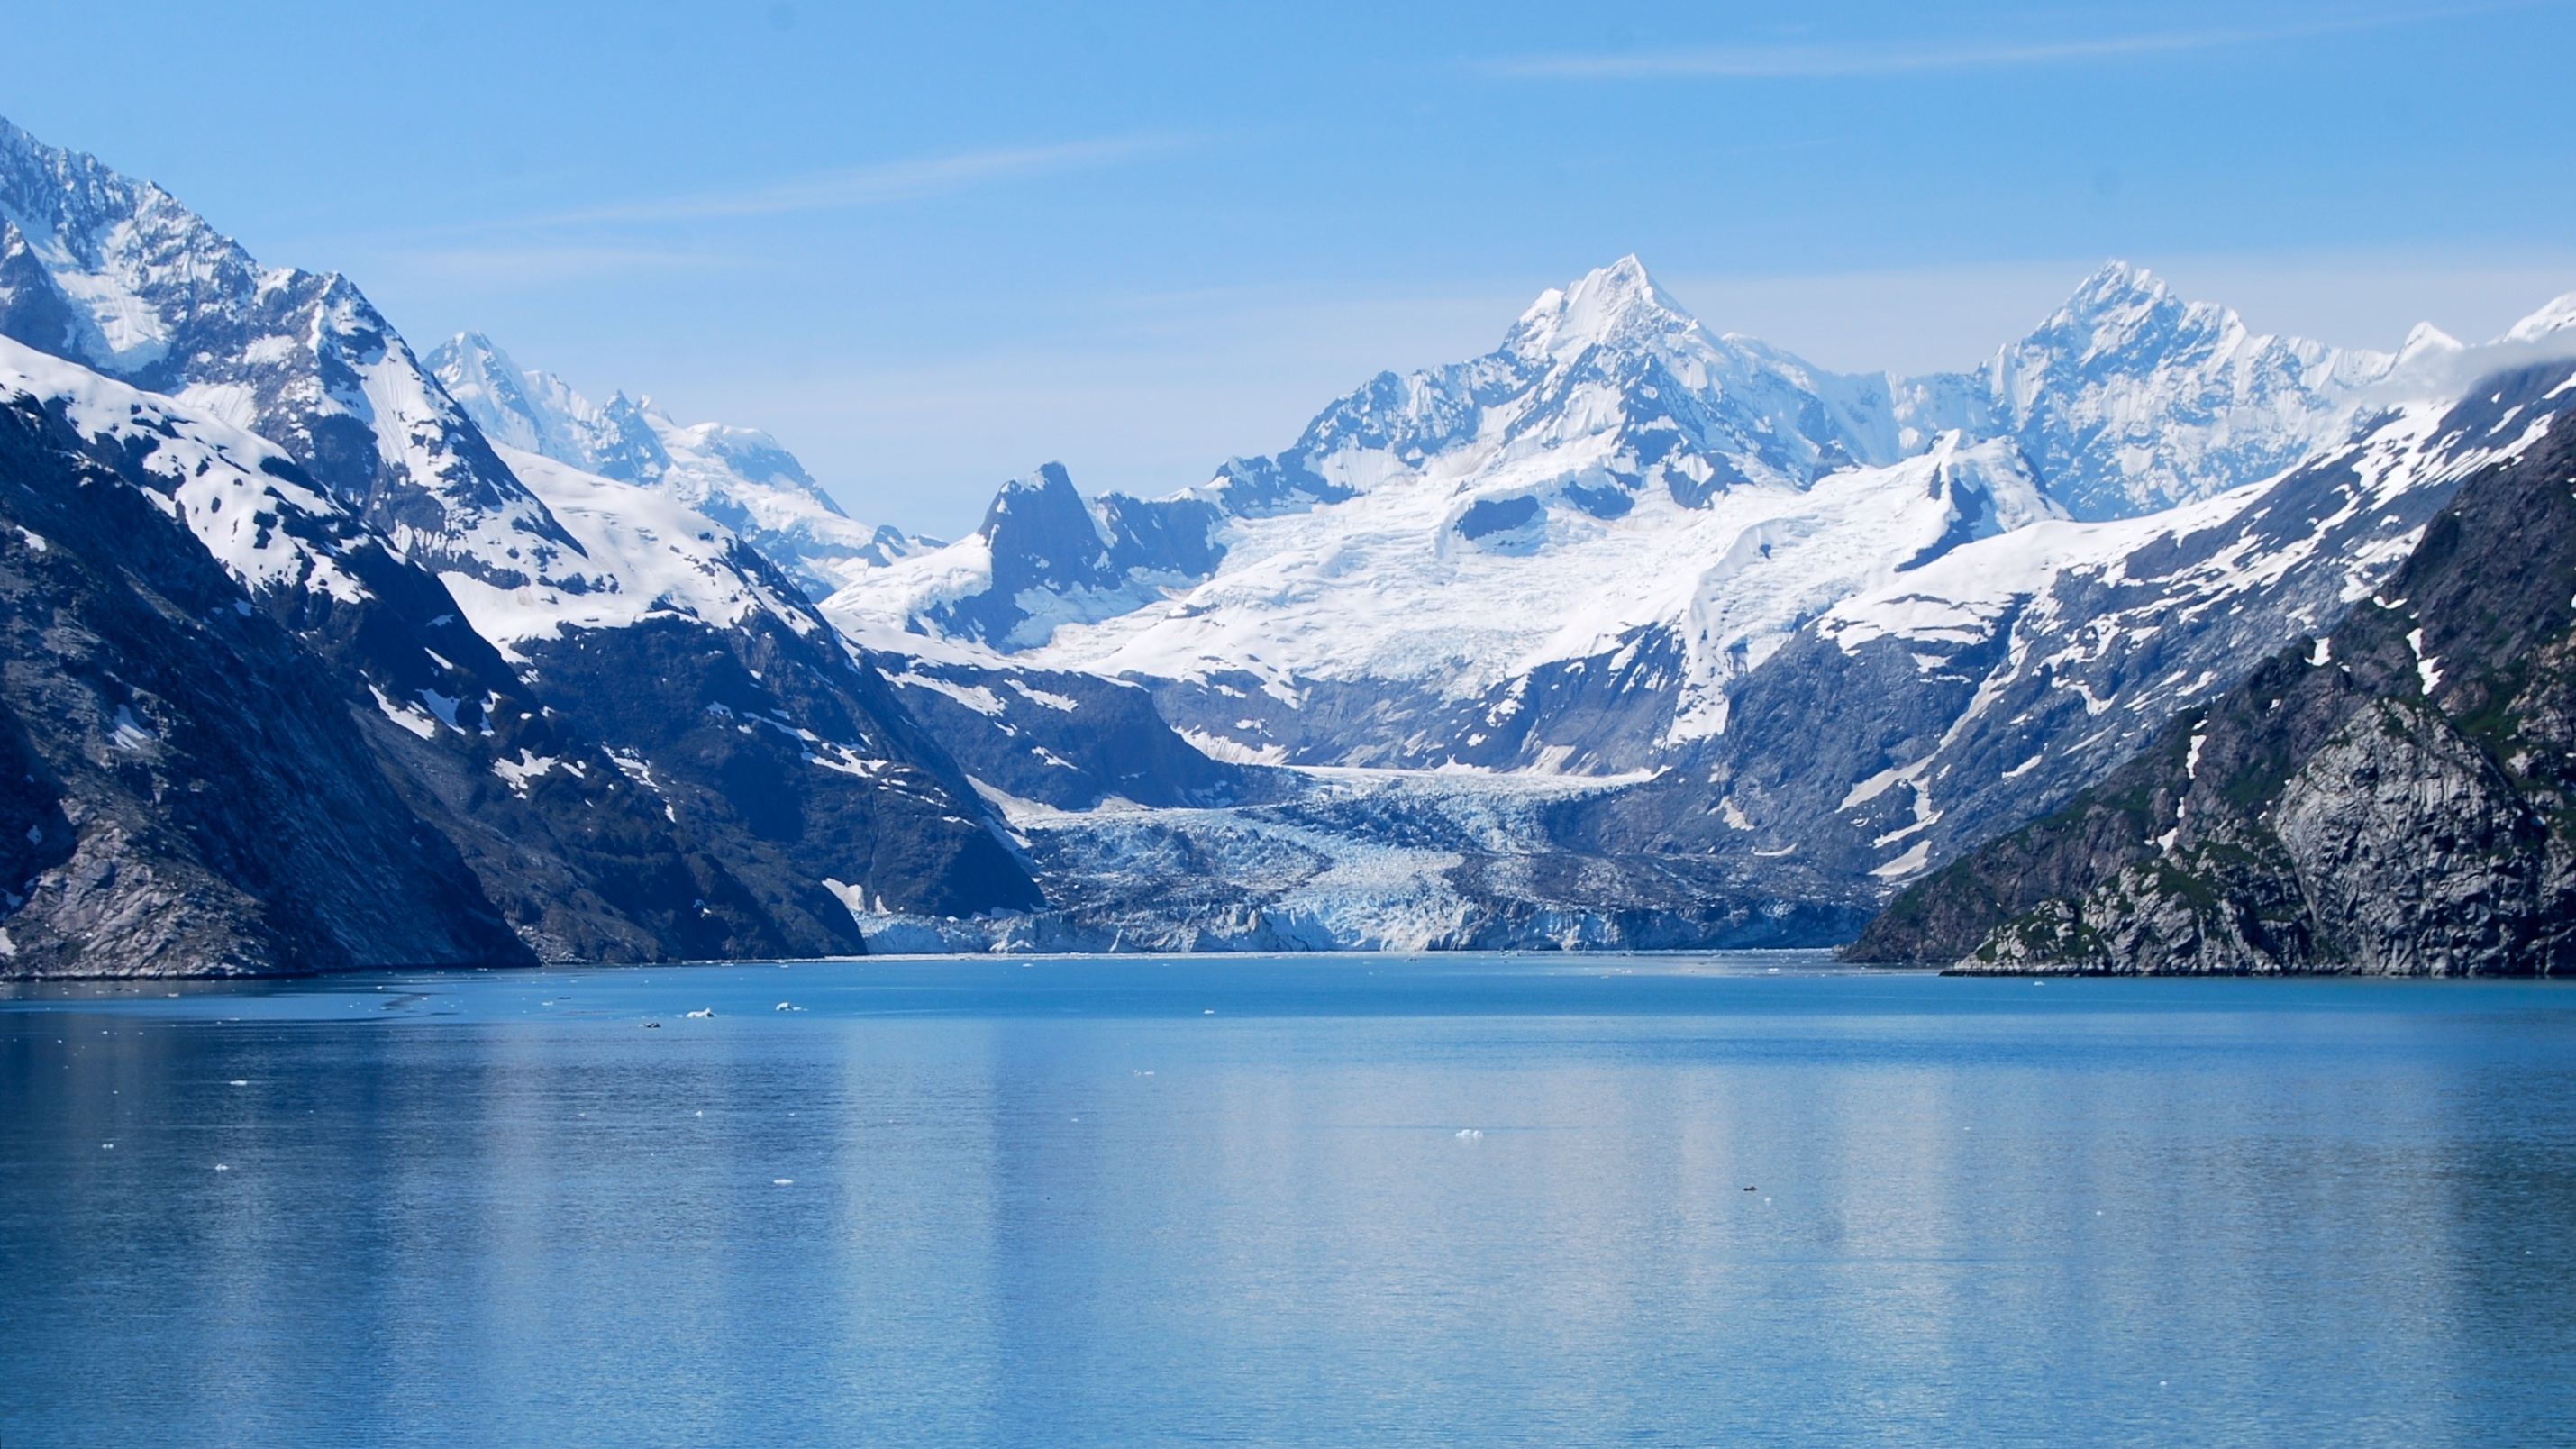 Glacier wallpapers, Earth's hq, Glacier pictures, Stunning 4K images, 2860x1610 HD Desktop